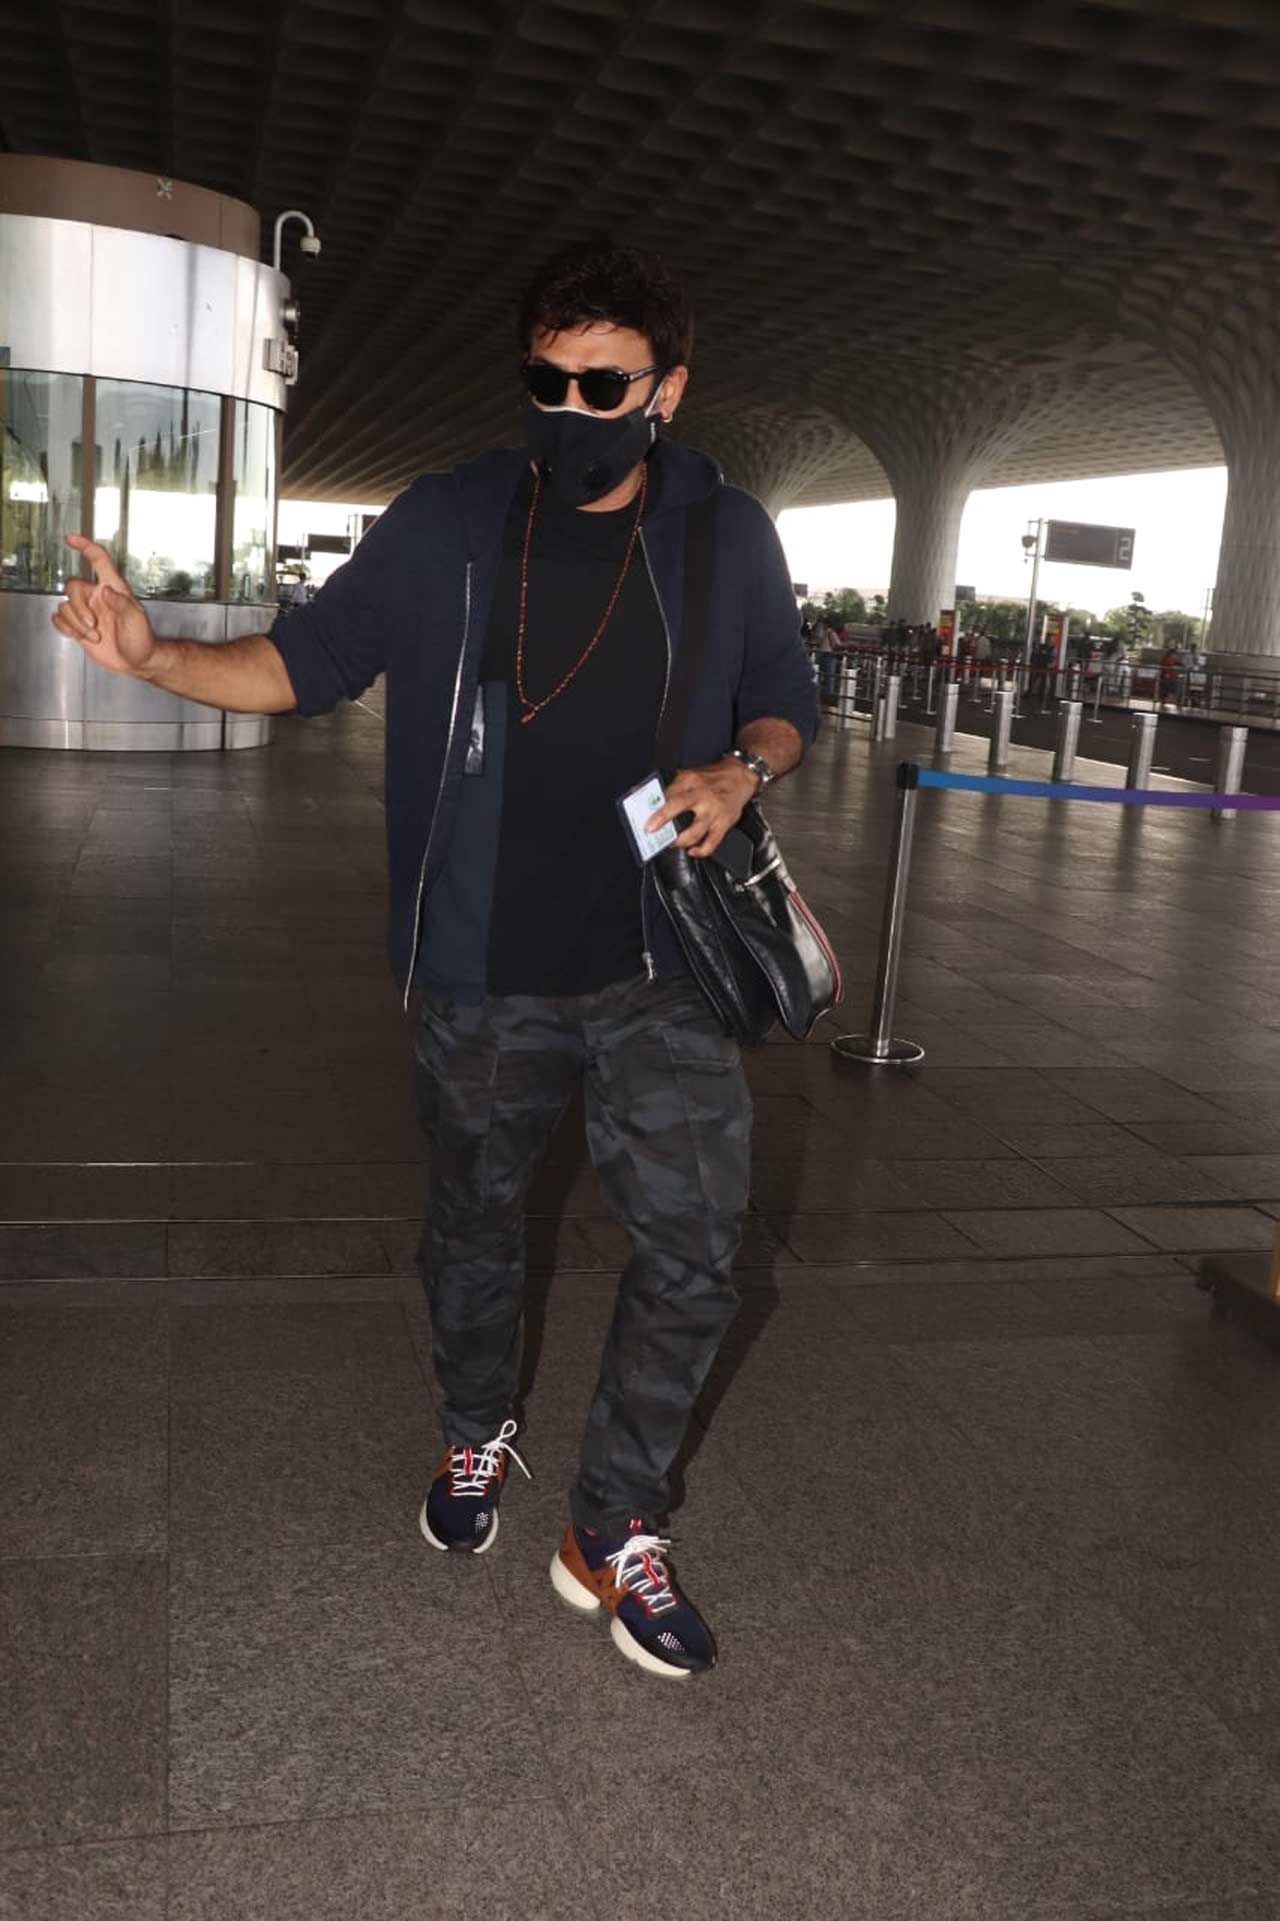 South actor Venkatesh Daggubati was also clicked at the airport.